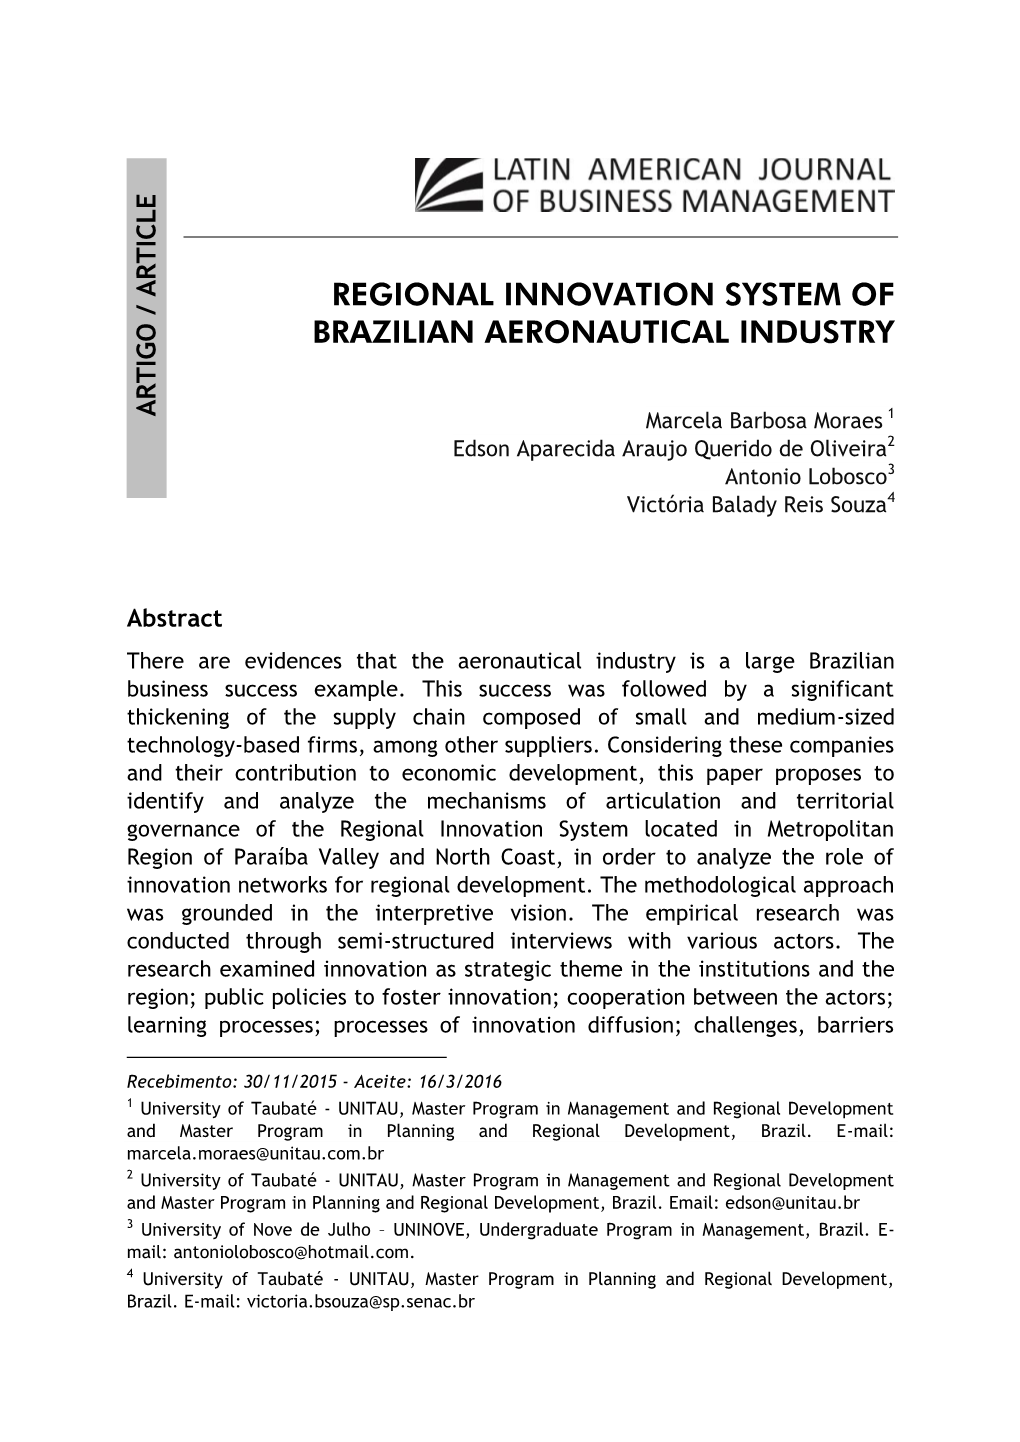 Regional Innovation System of Brazilian Aeronautical Industry